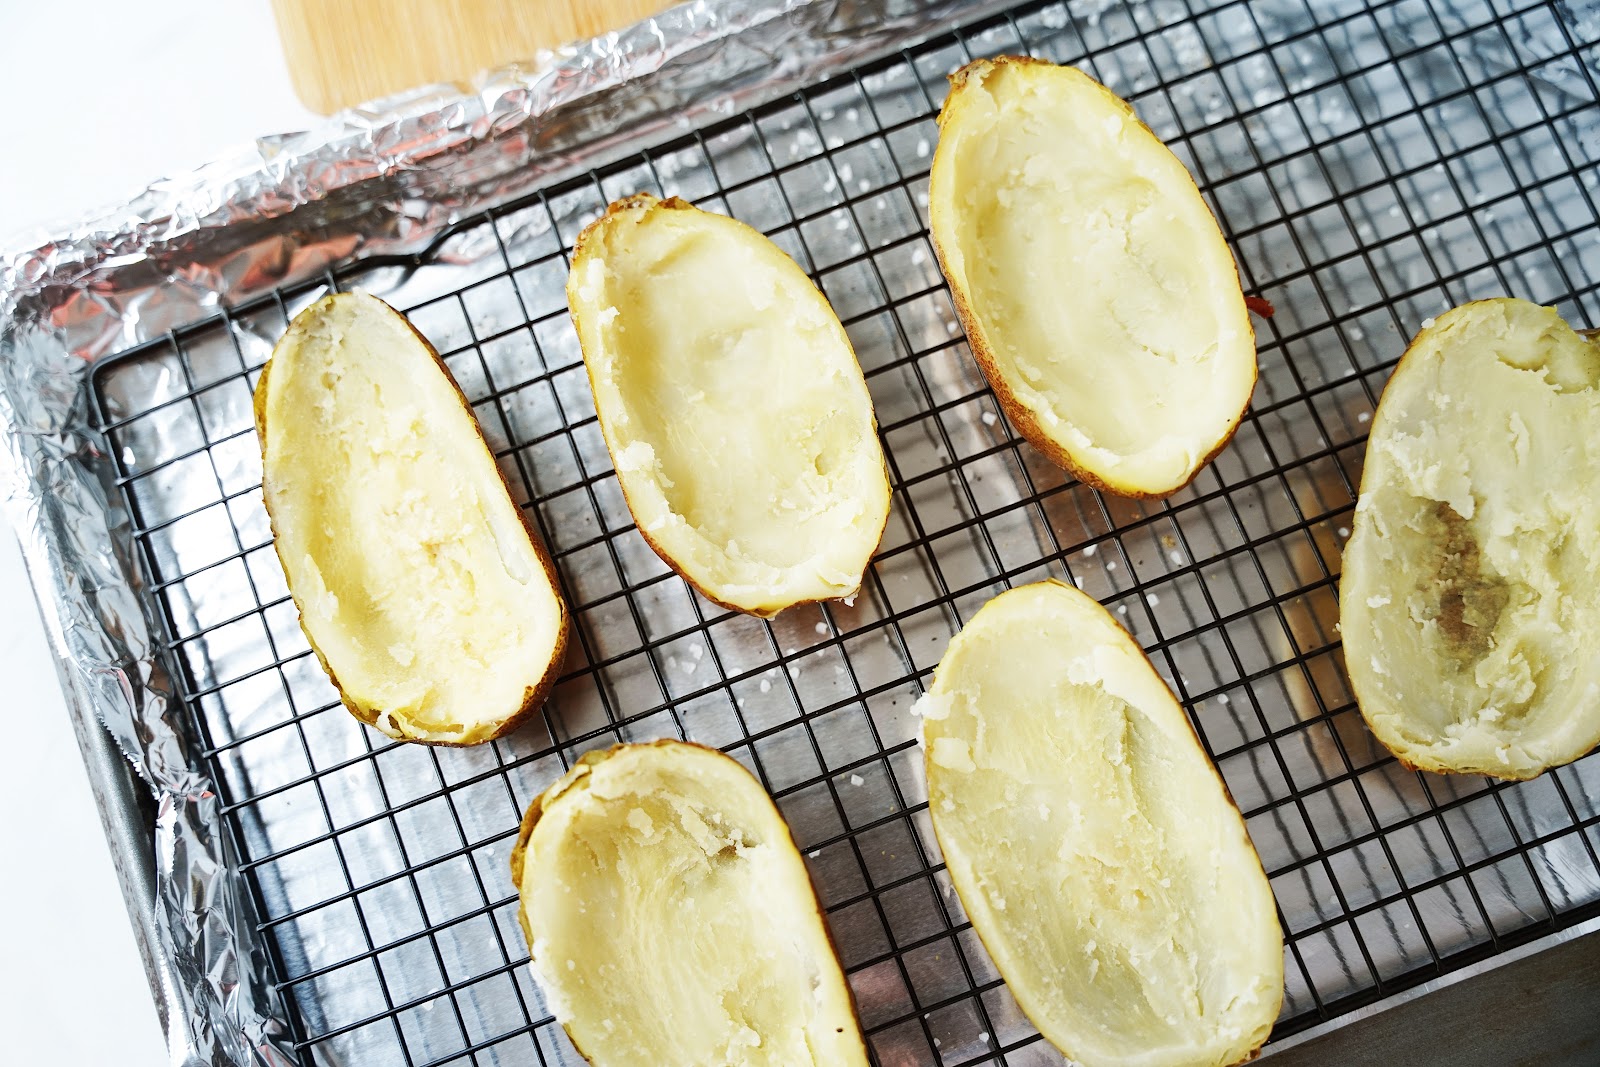 Bake potato skins for 10 minutes.